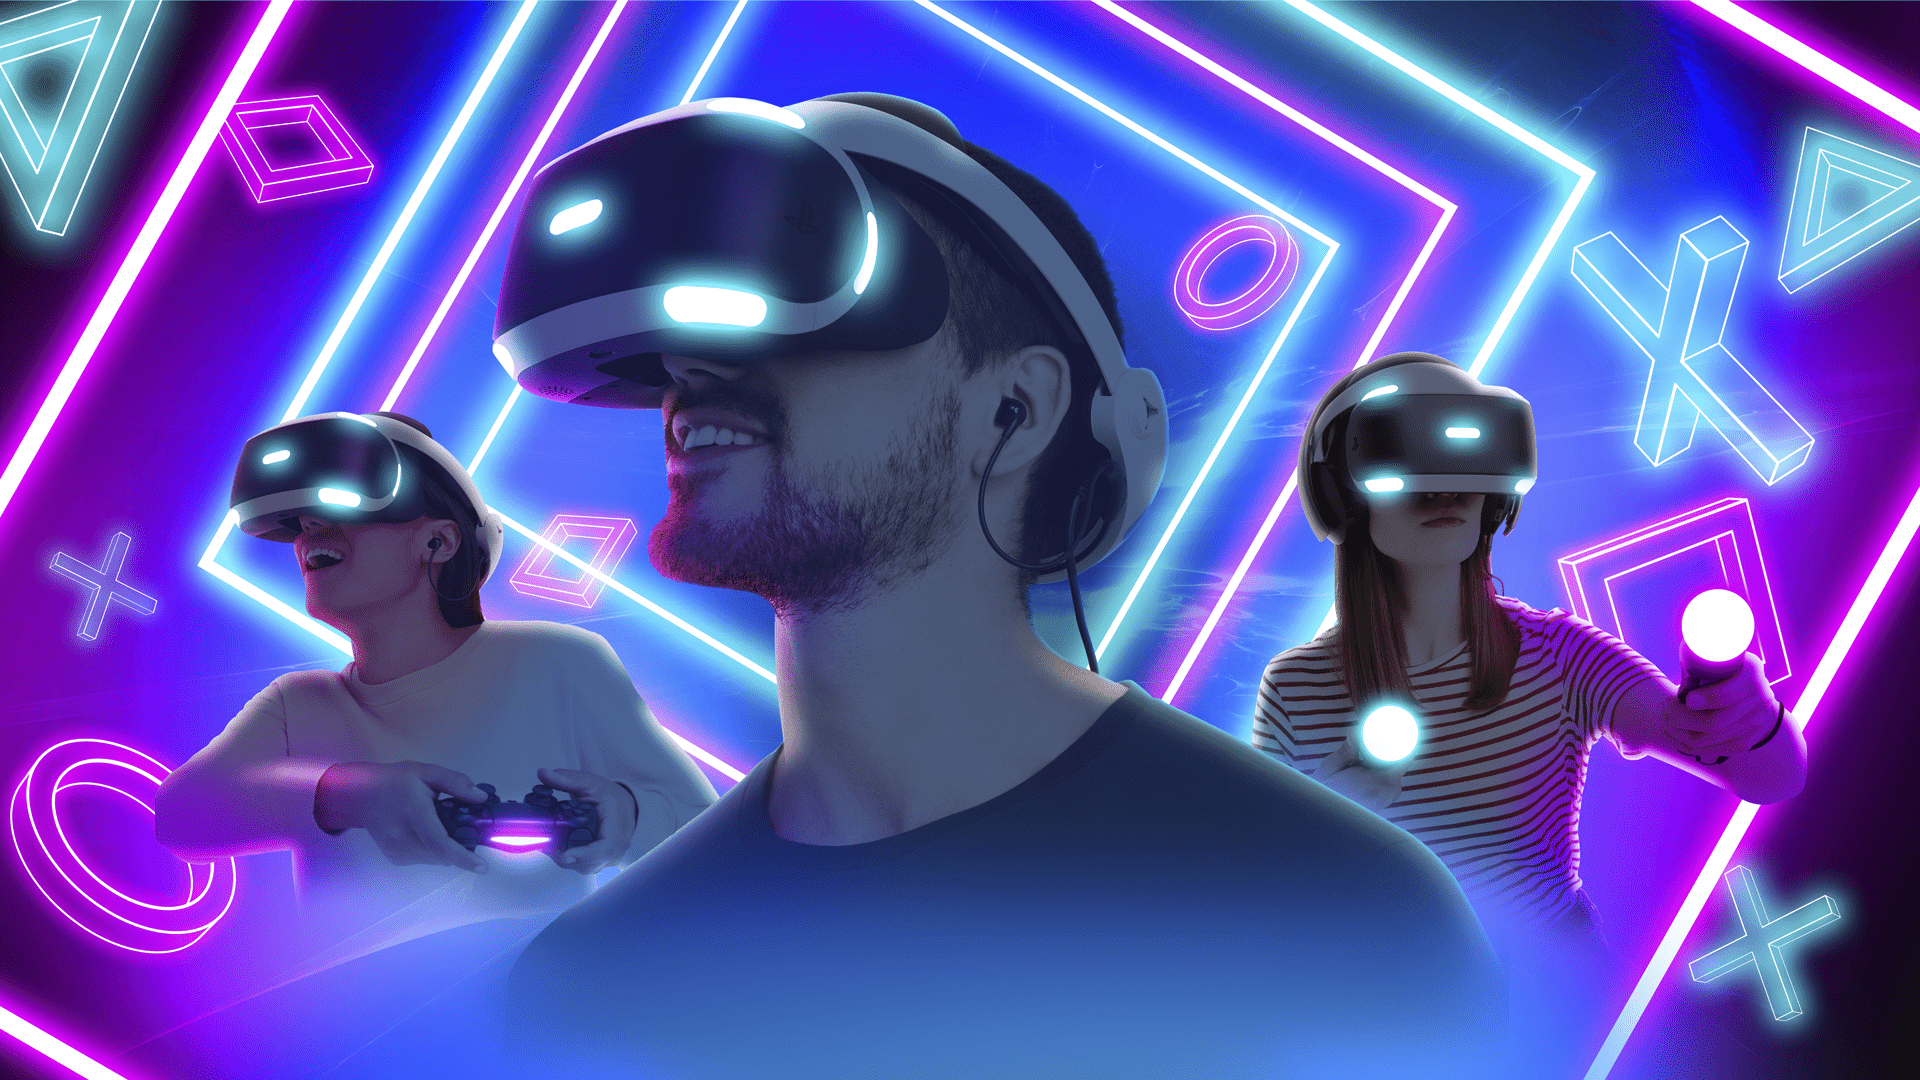 VR Marketing